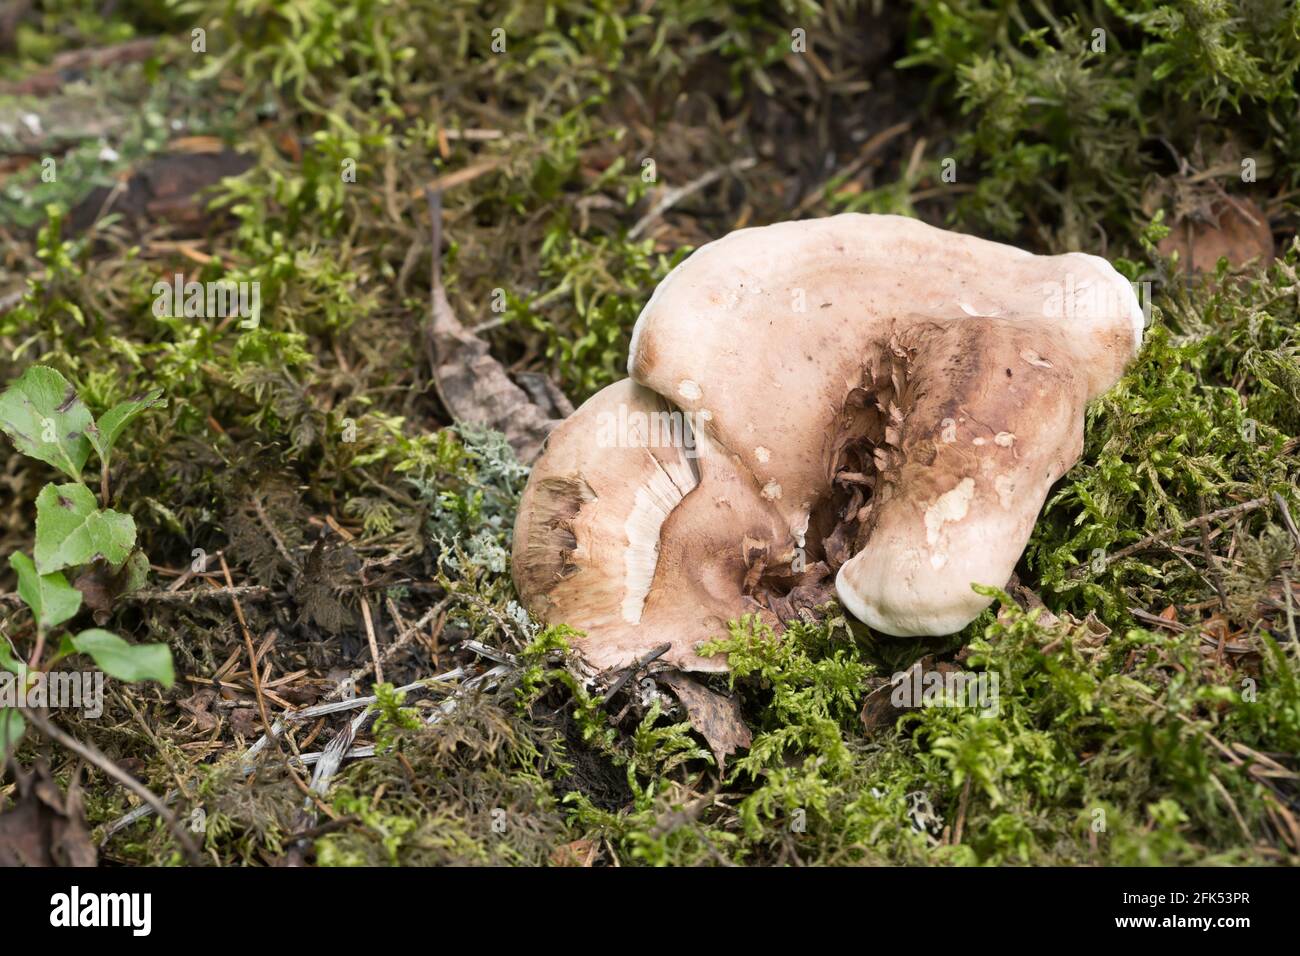 Tooth fungus, Bankera violascens growing among moss Stock Photo